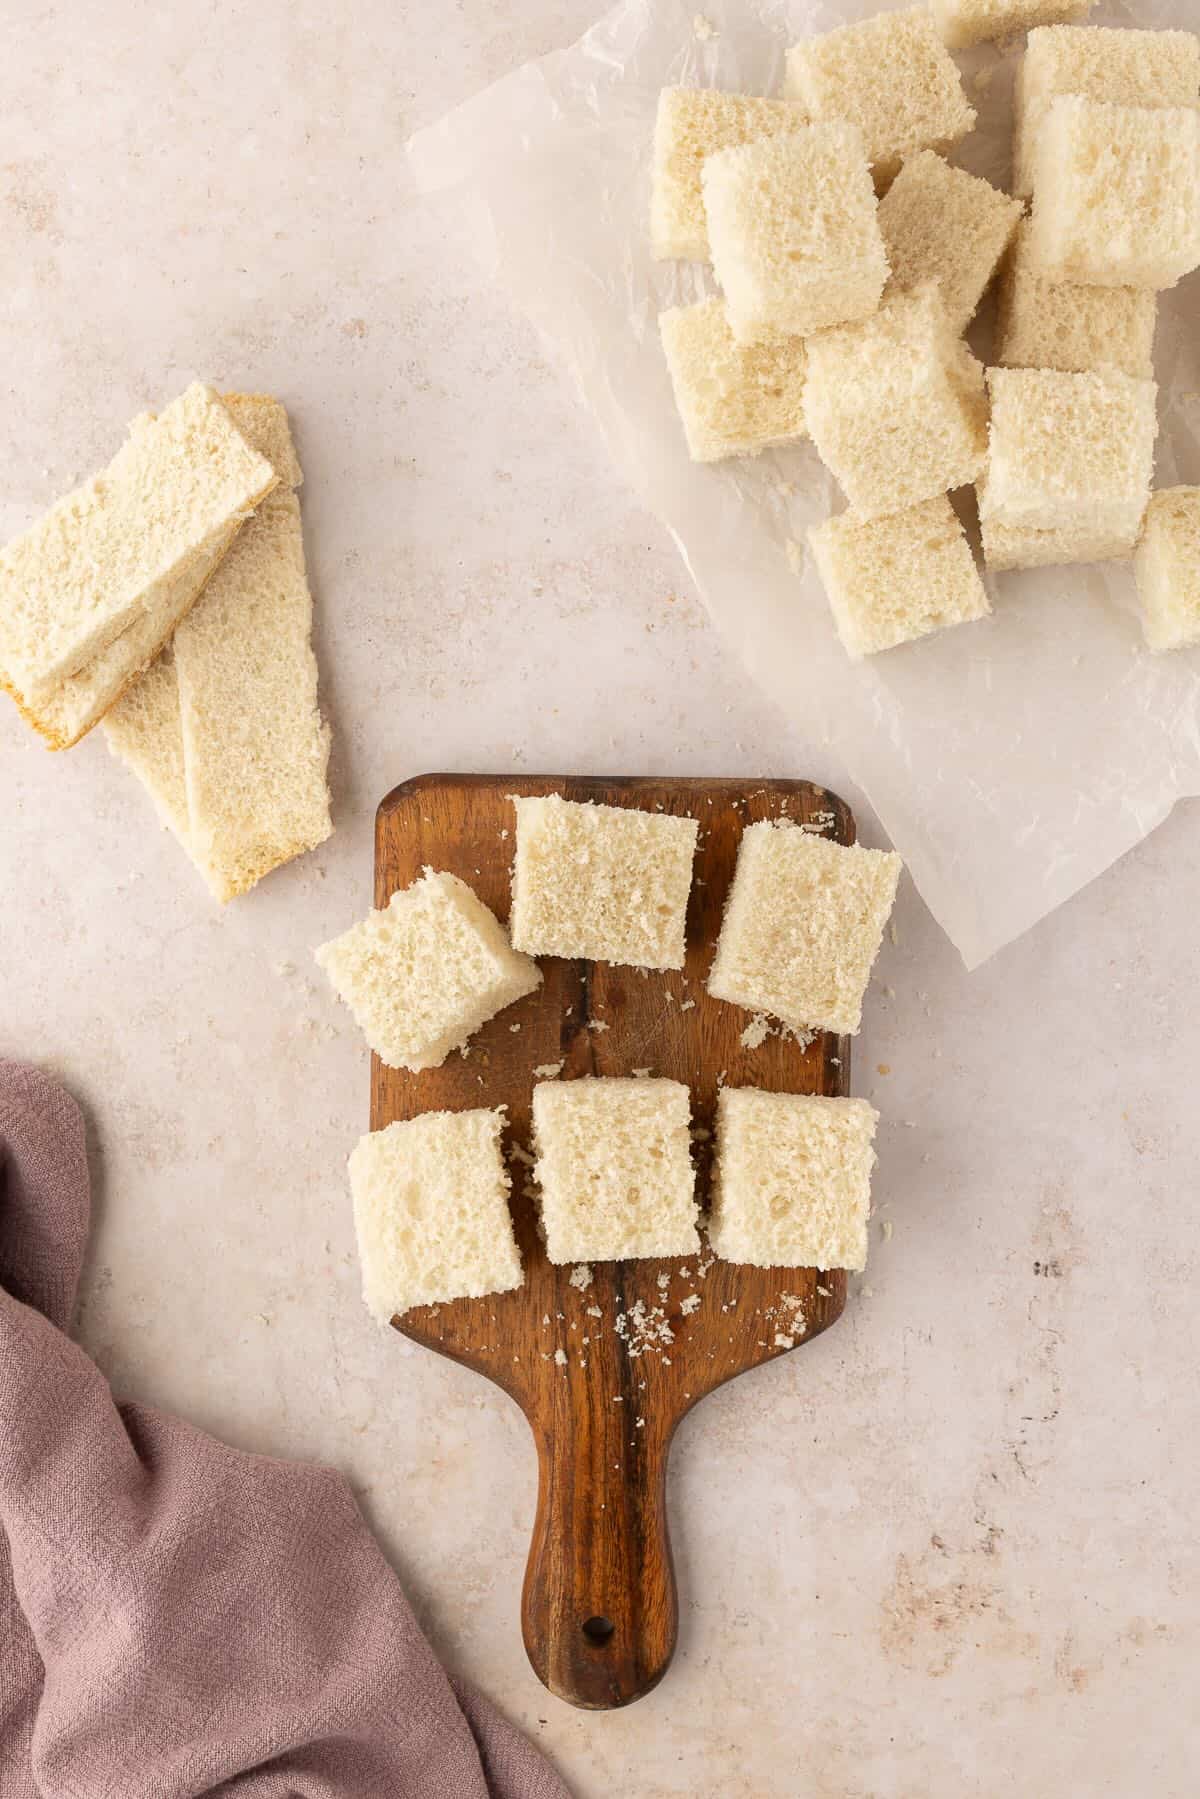 Bread cut into cubes on a cutting board. 